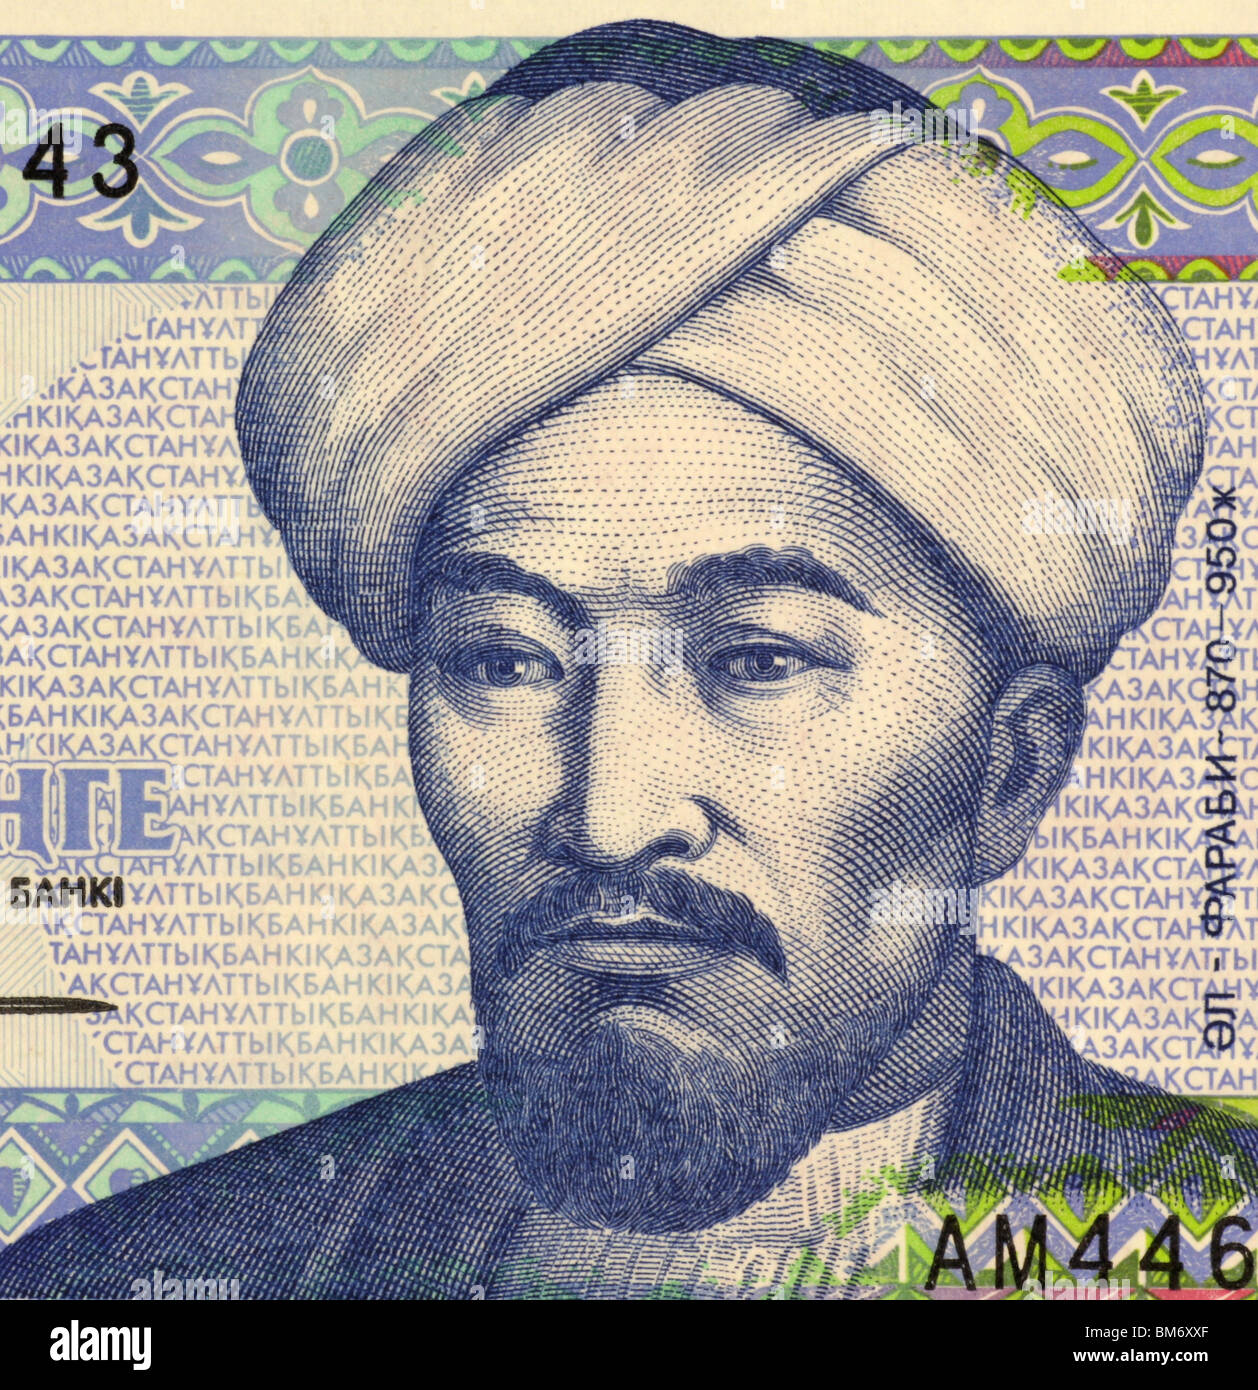 Al Farabi (872-951) on 1 Tenge 1993 Banknote from Kazakhstan. Stock Photo